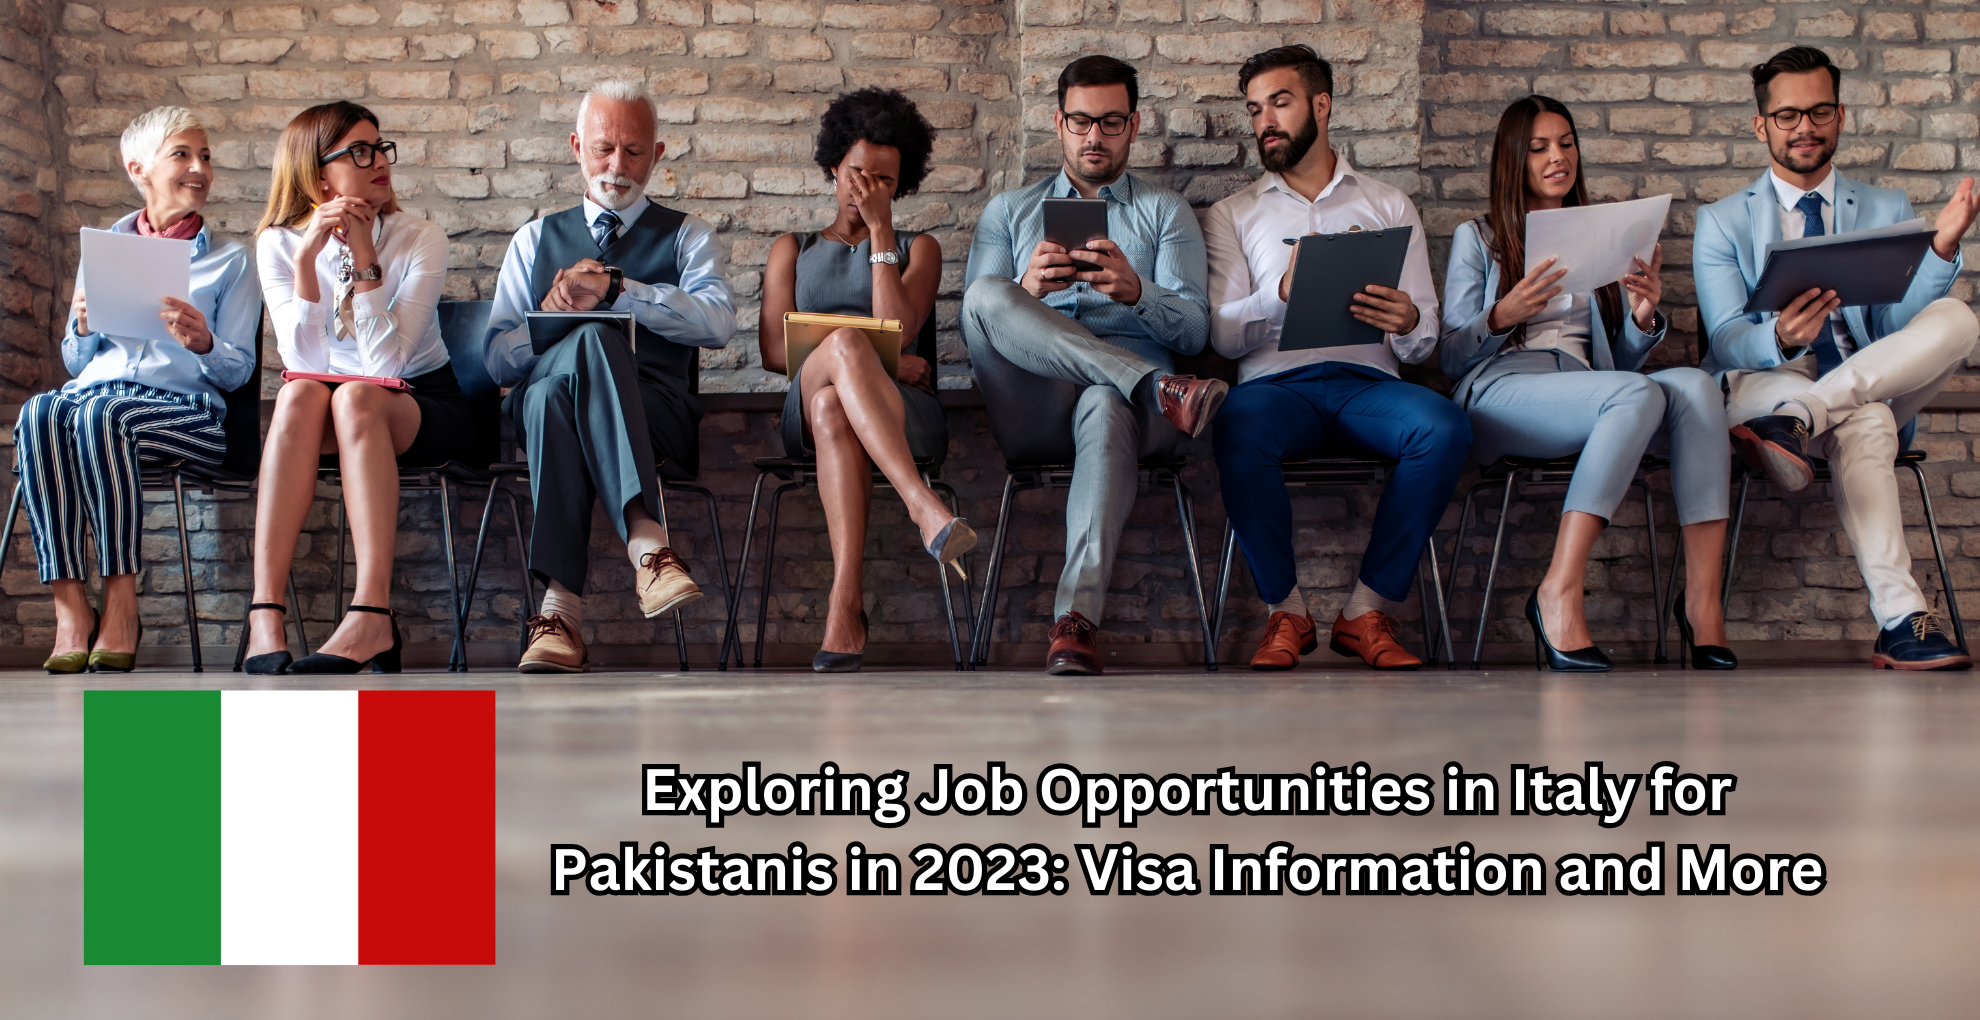 Exploring Job Opportunities in Italy for Pakistanis in 2023